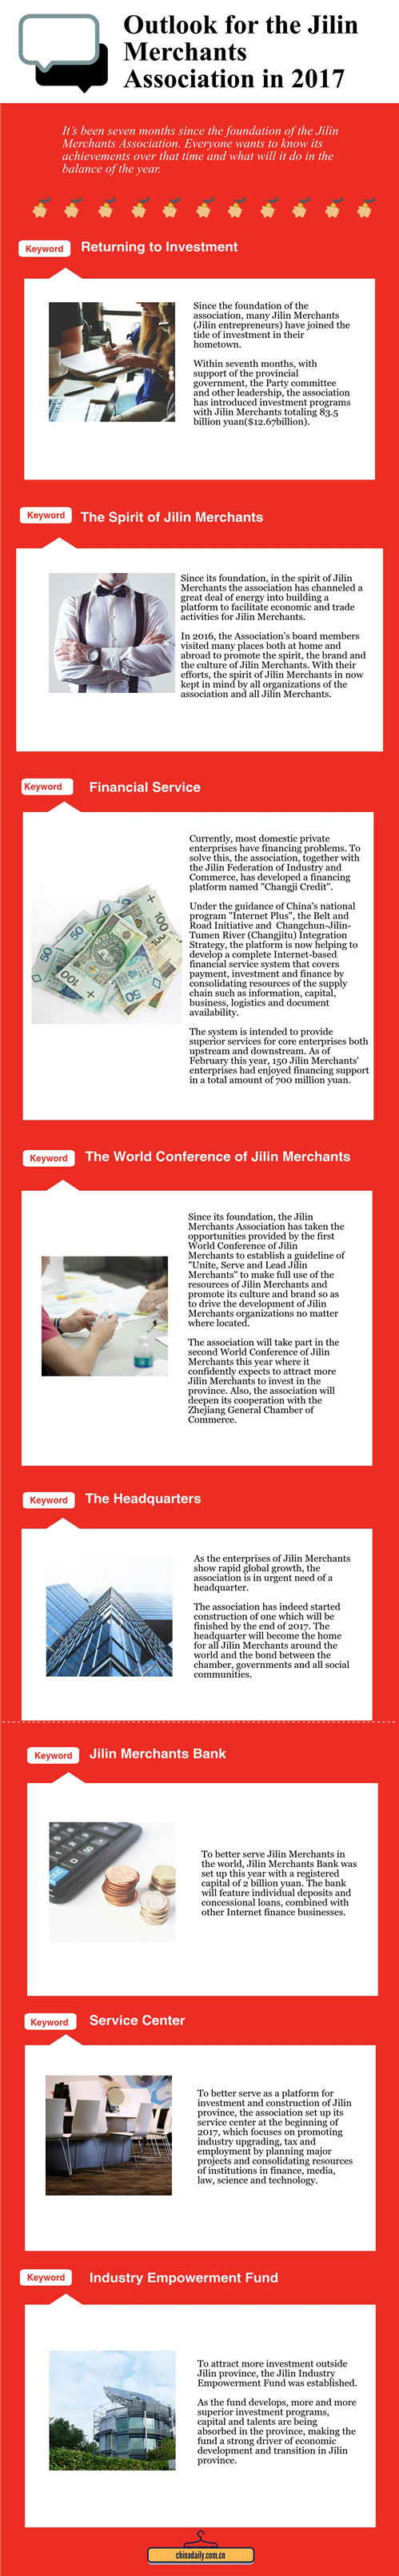 Outlook for the Jilin Merchants Association in 2017